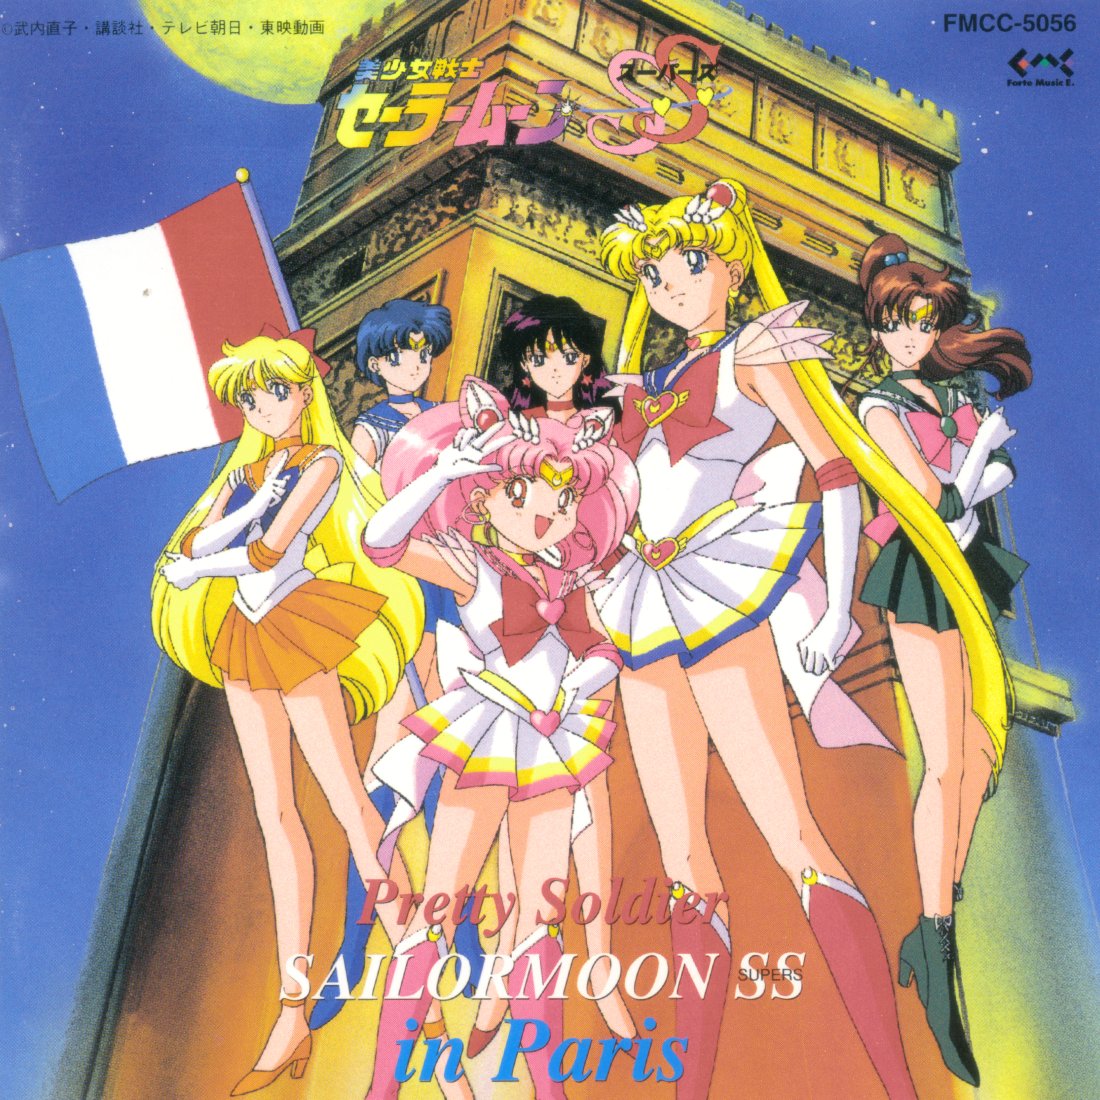 Sailor Moon SuperS HD wallpapers, Desktop wallpaper - most viewed